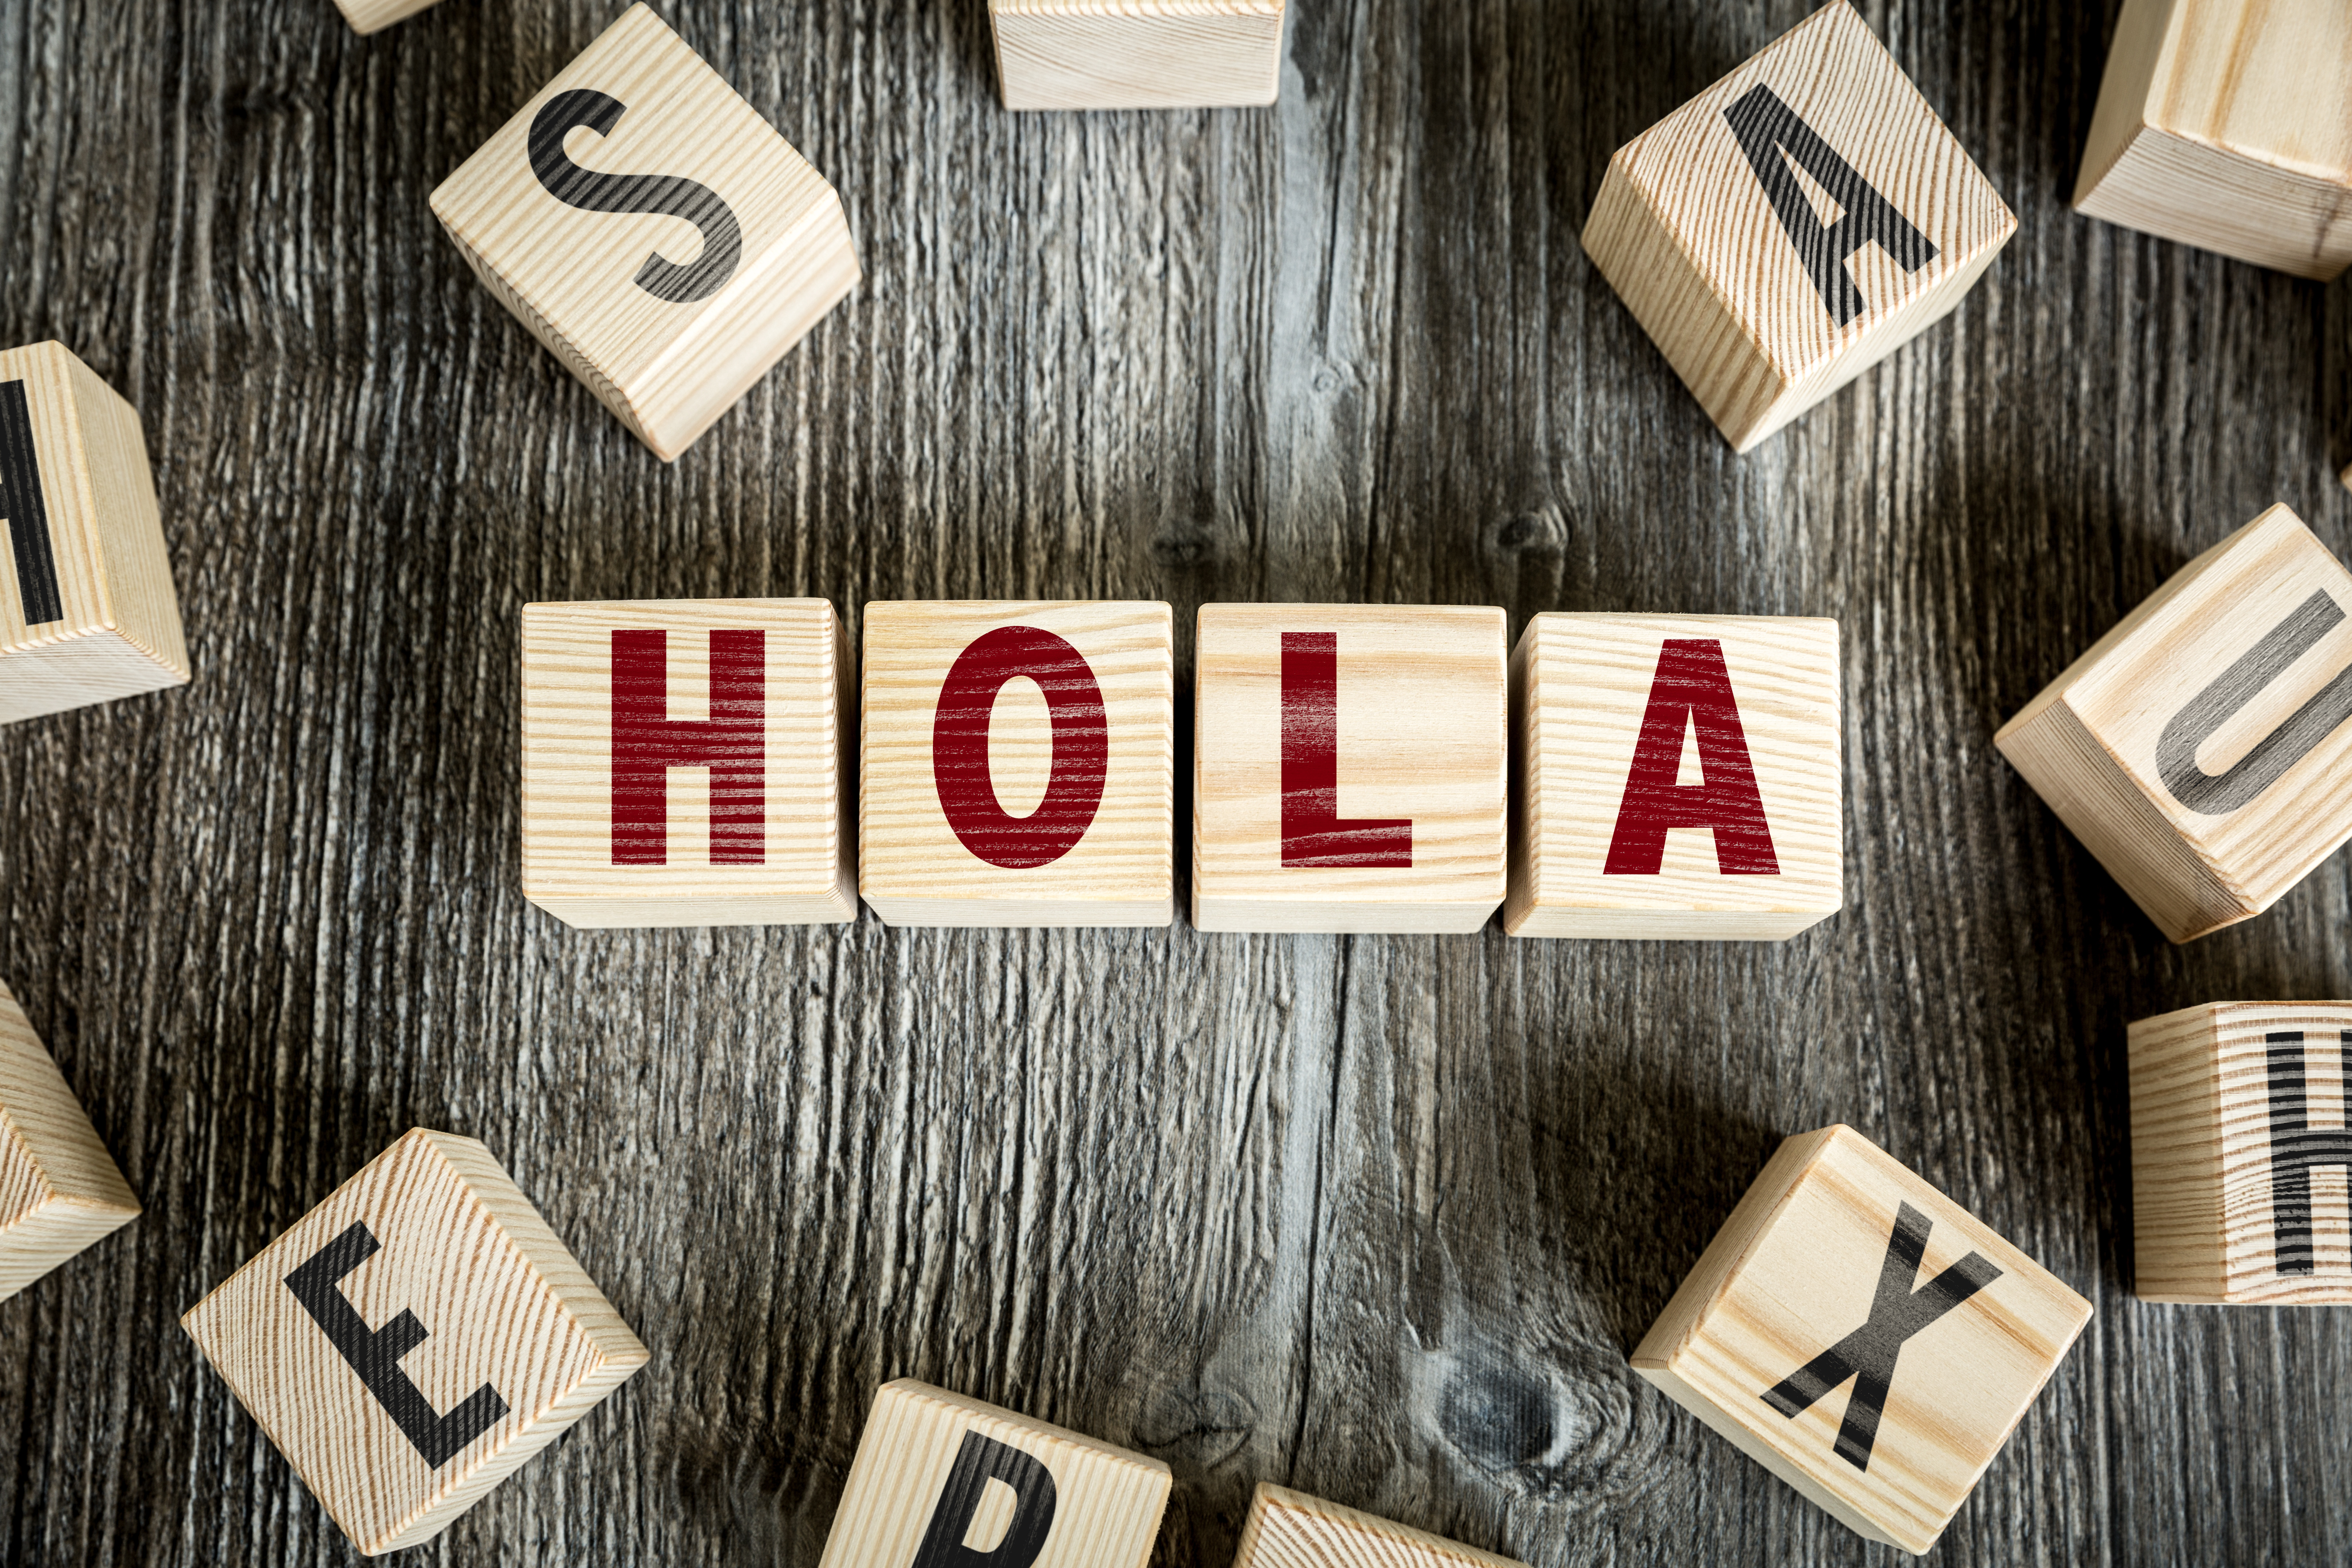 Habia una vez: A Storytime in Spanish